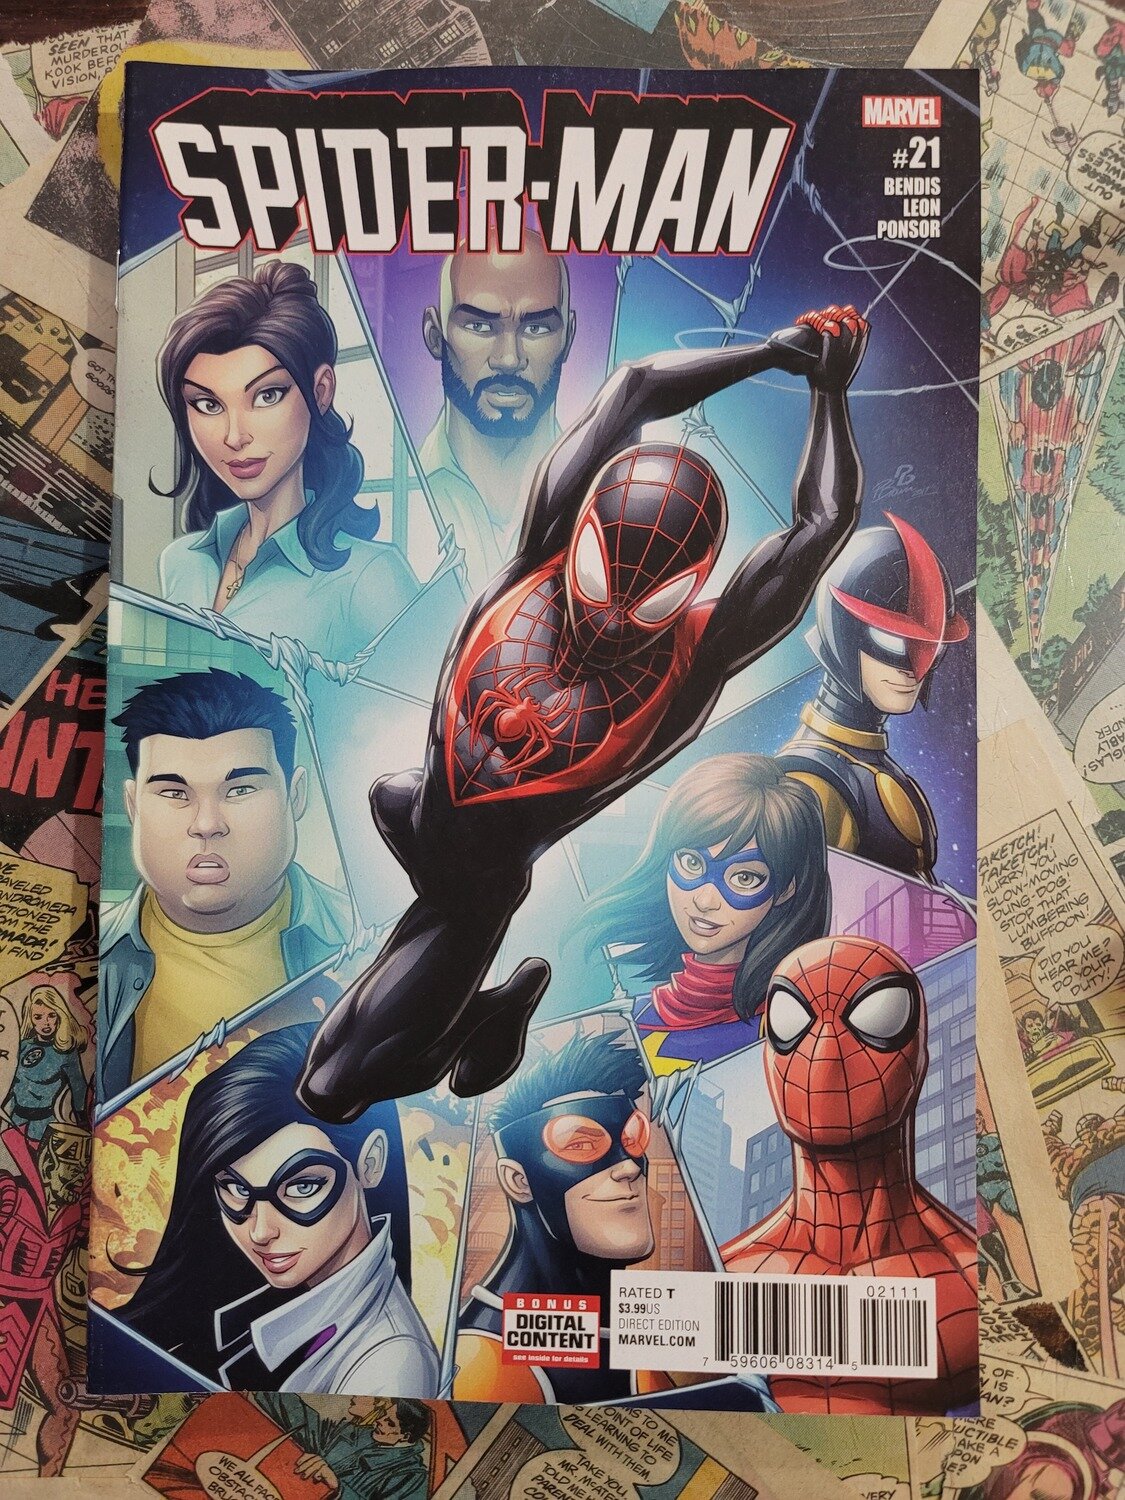 Spider-man Vol. 3 2016 #21 VF/NM